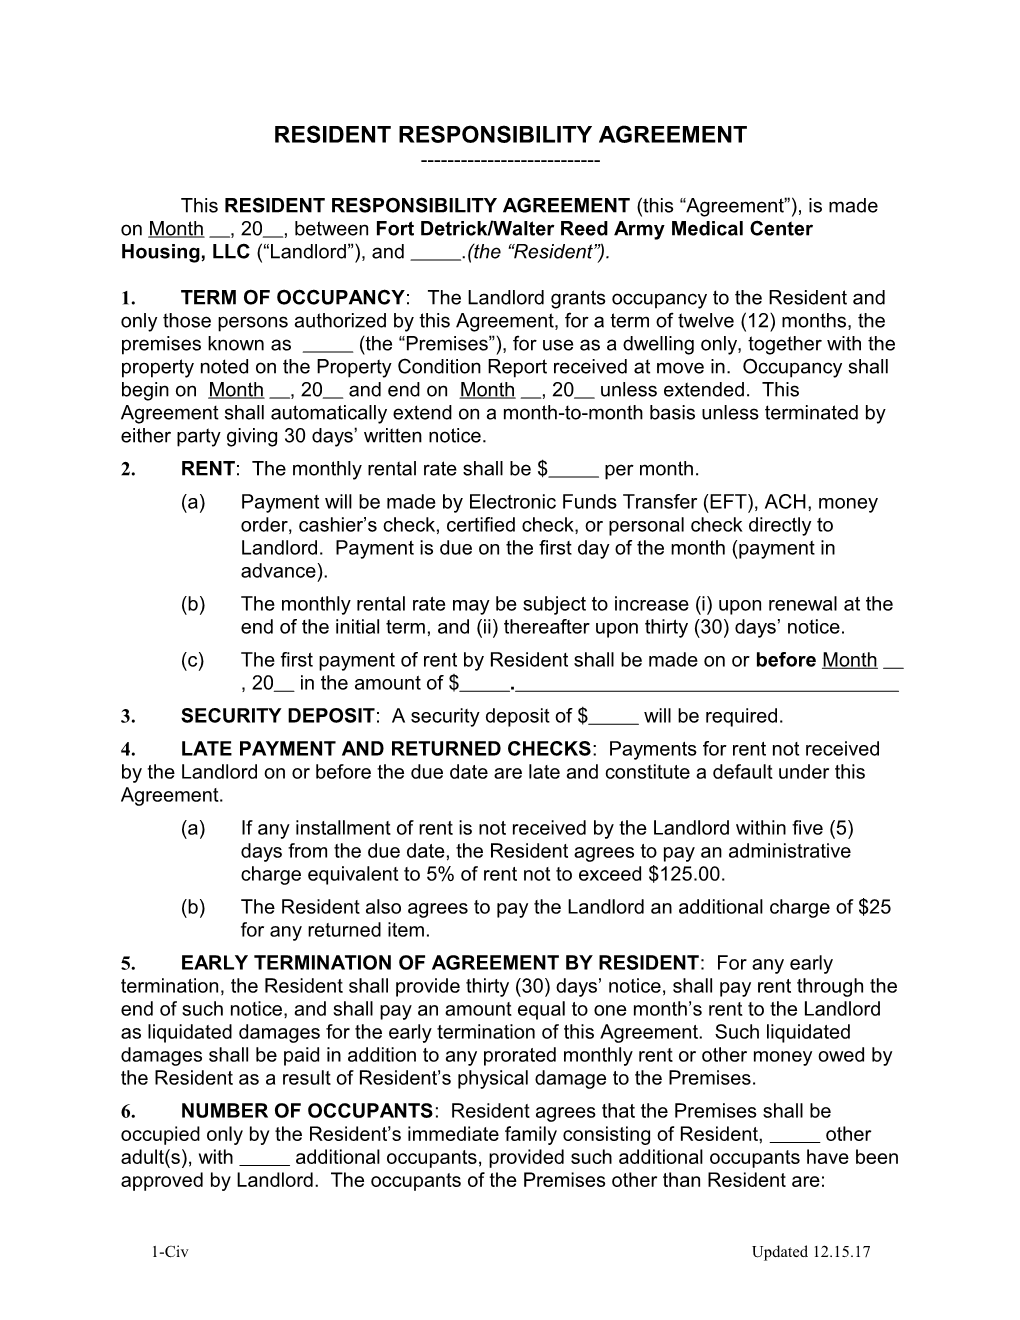 Resident Responsibility Agreement